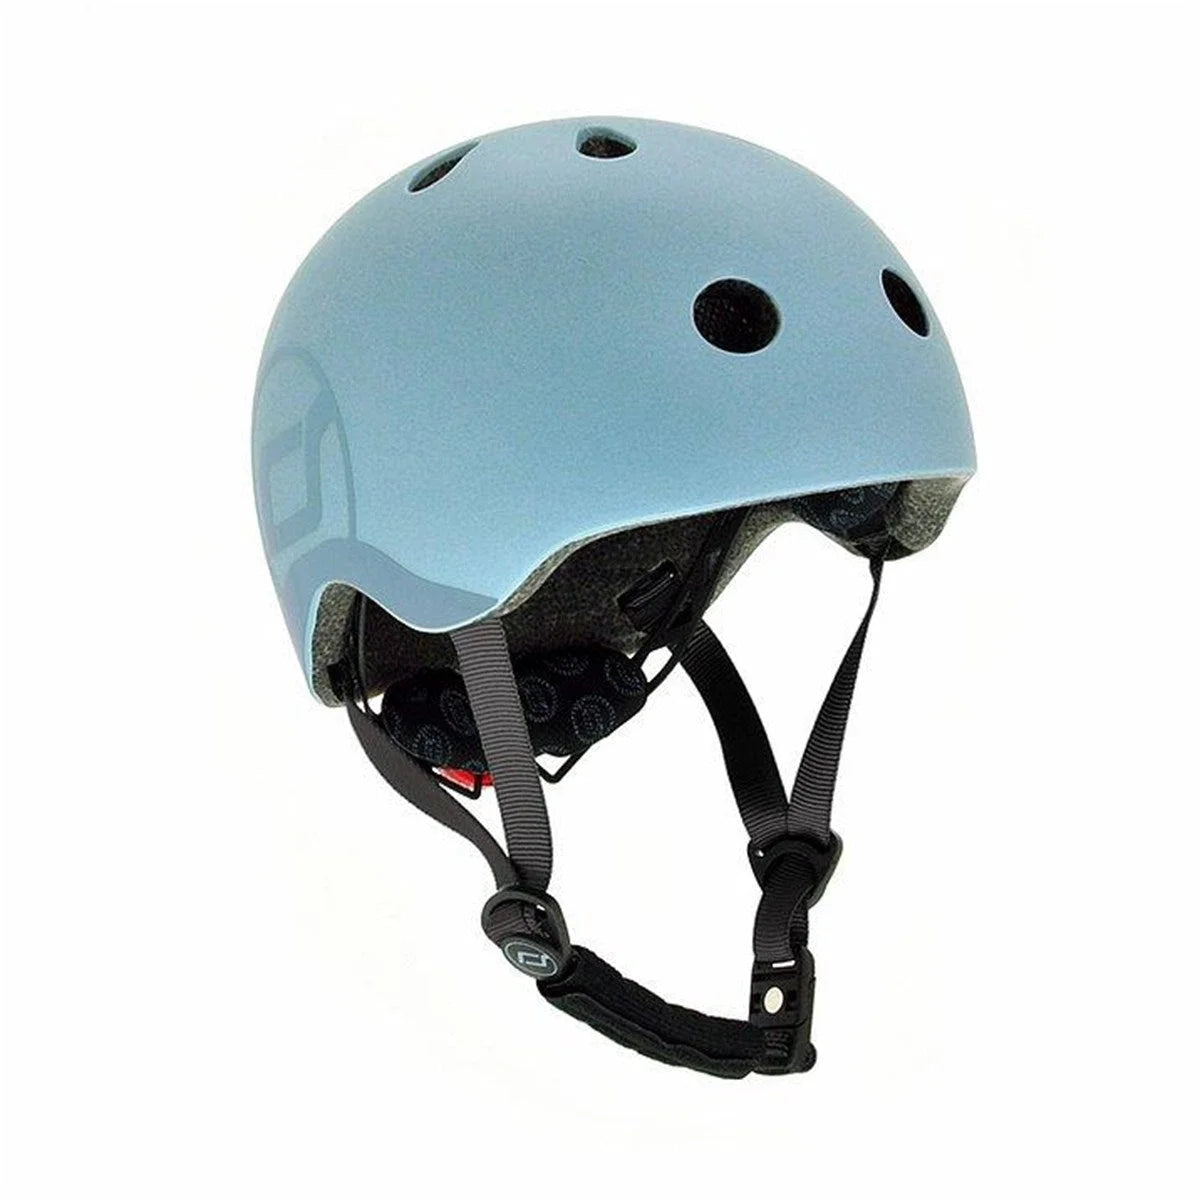 Scoot and Ride Helmet Çocuk Kaskı S-M Petrol Mavisi 190605-96369 | Toysall